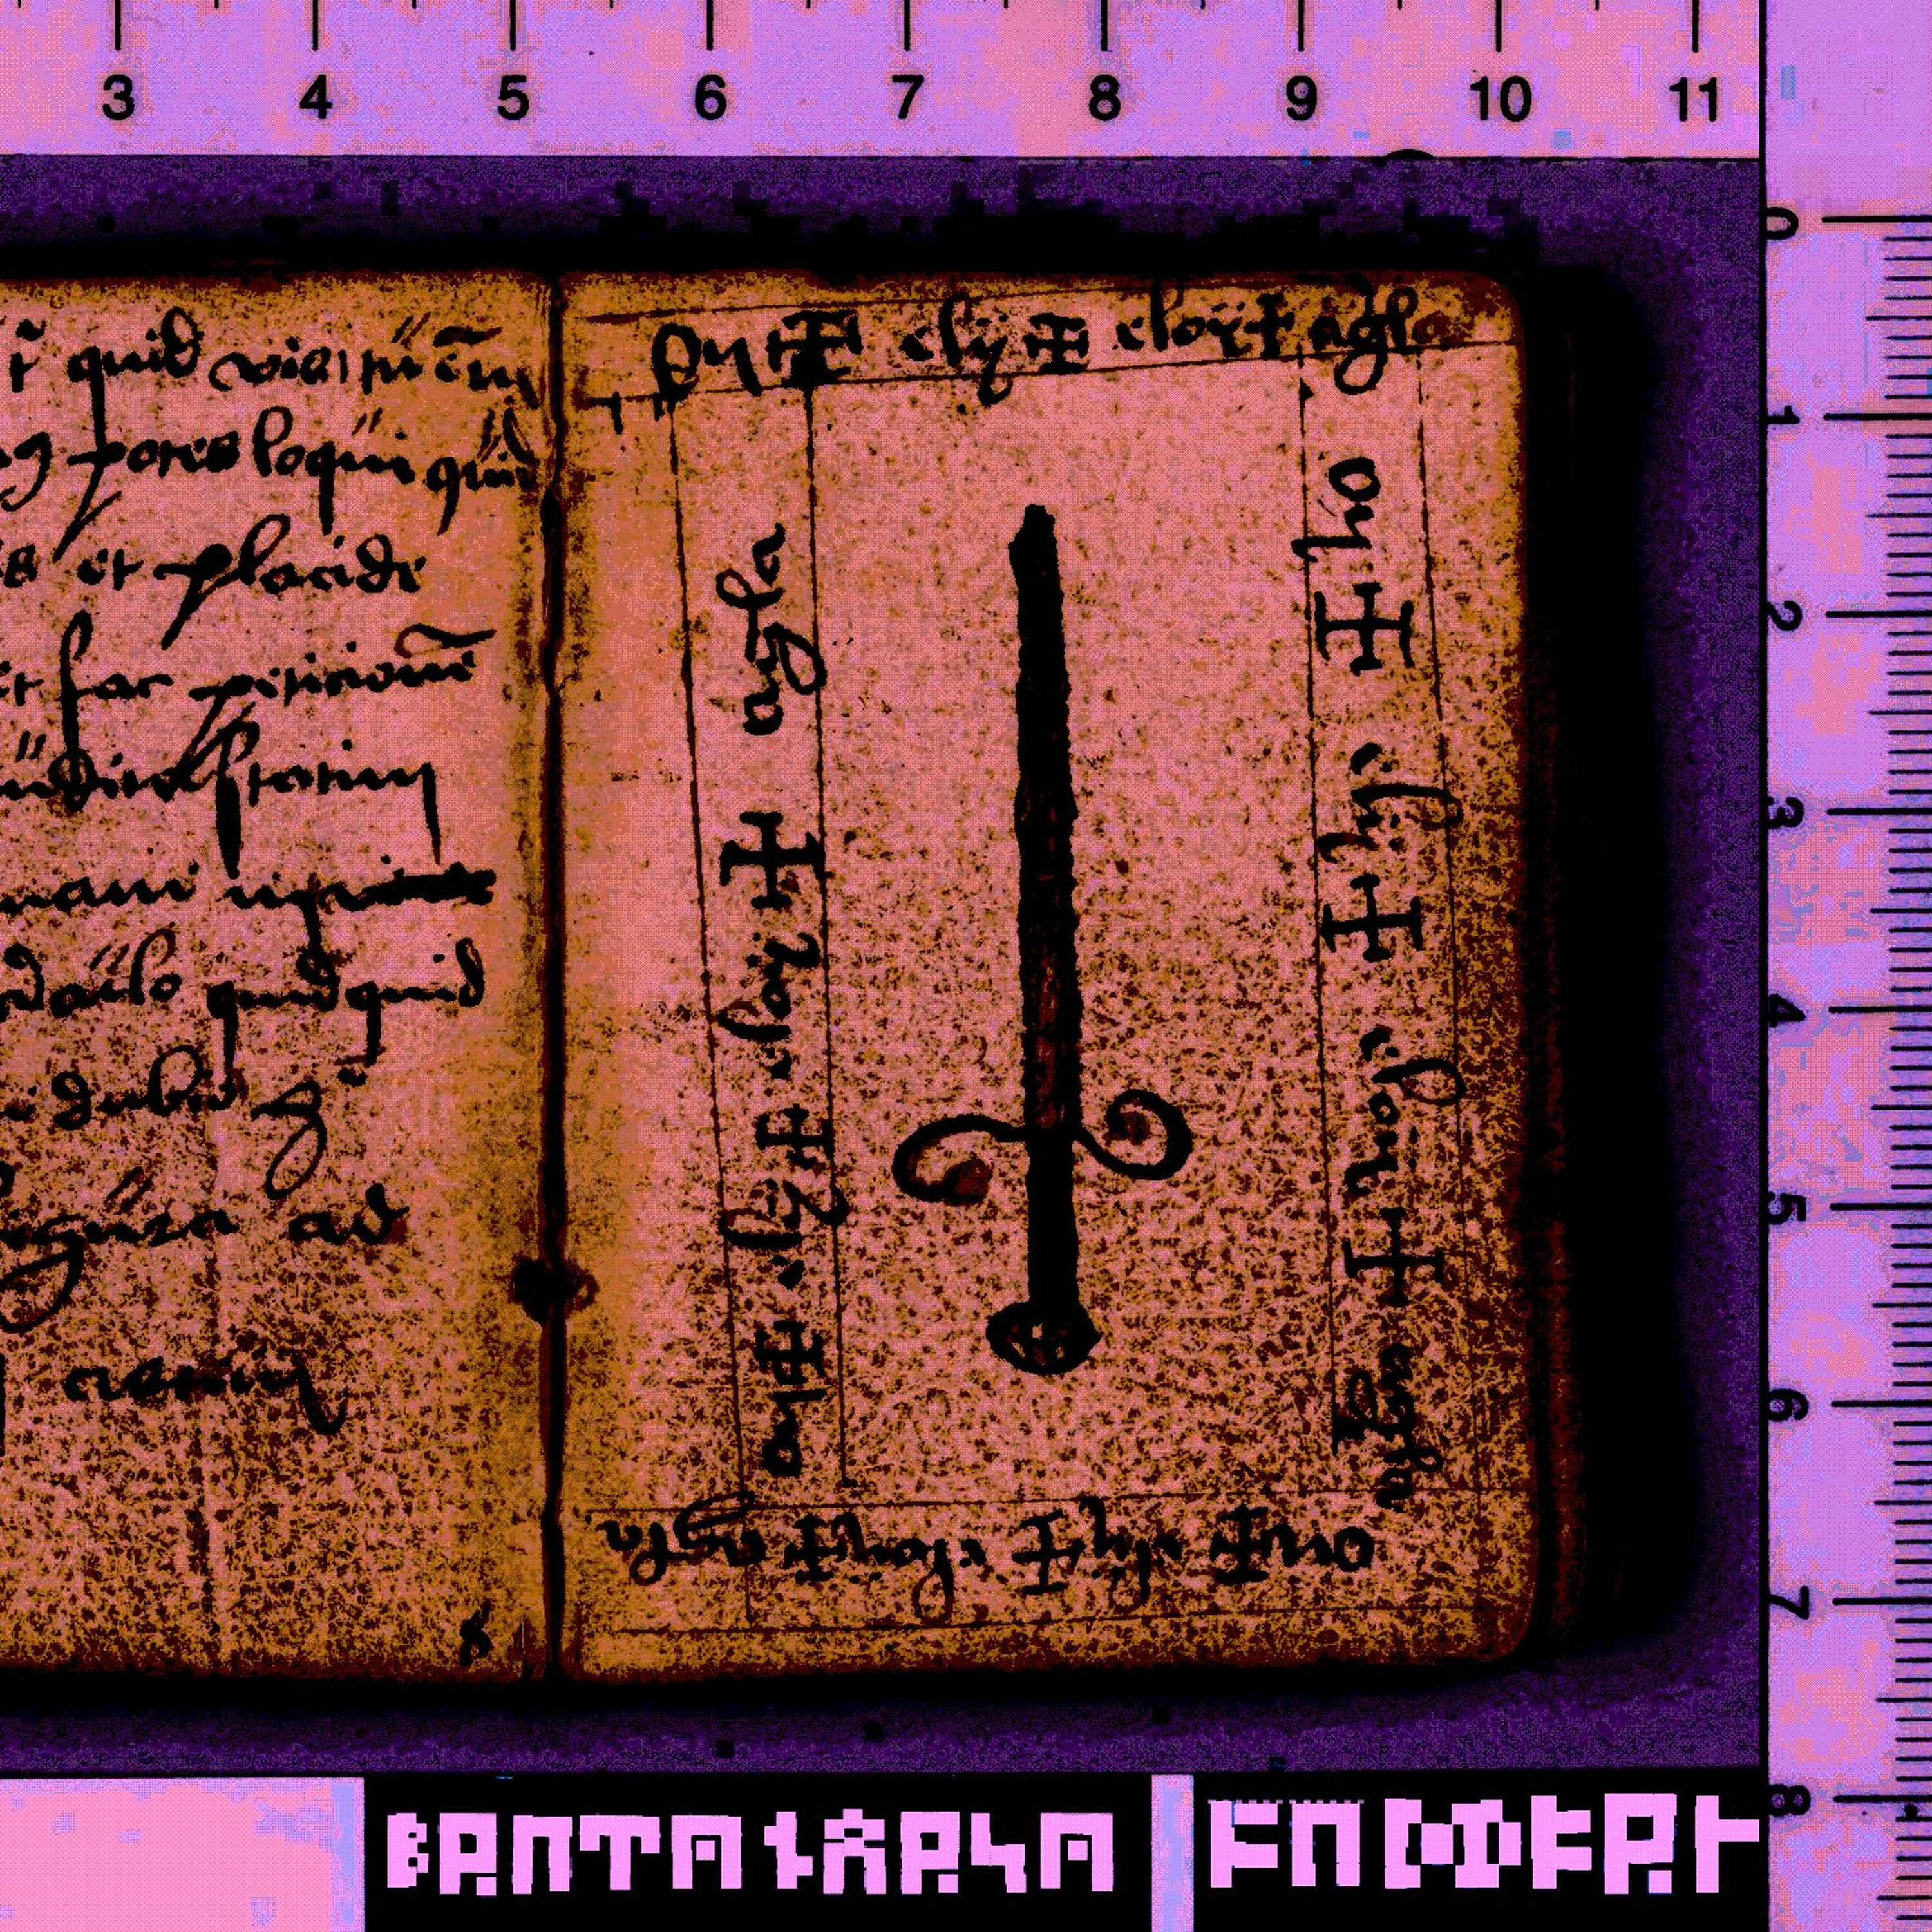 41: Written sorcery from Runes to Cyprianus